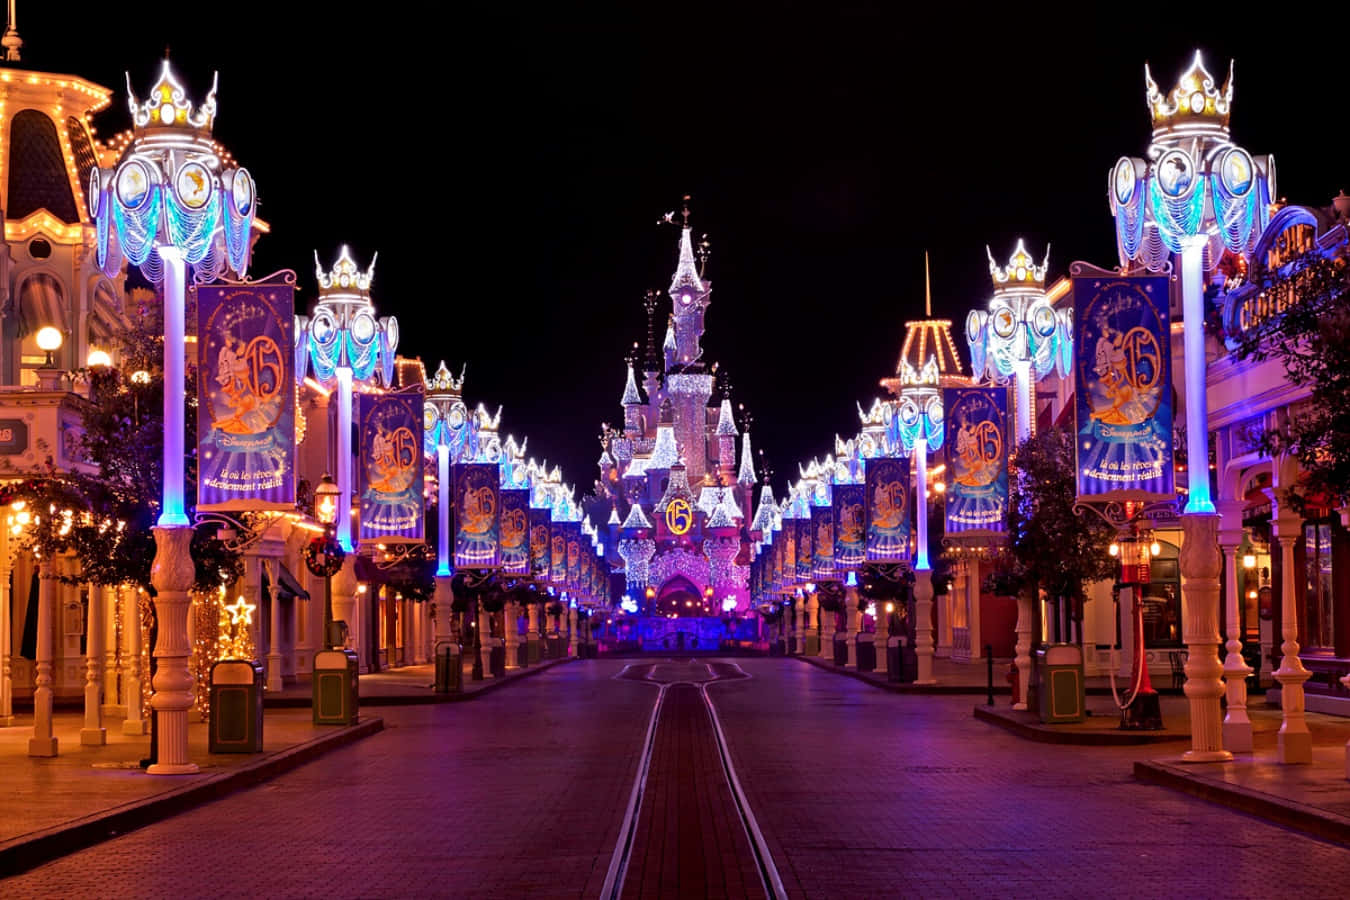 "Explore the Magic at Disney World!"